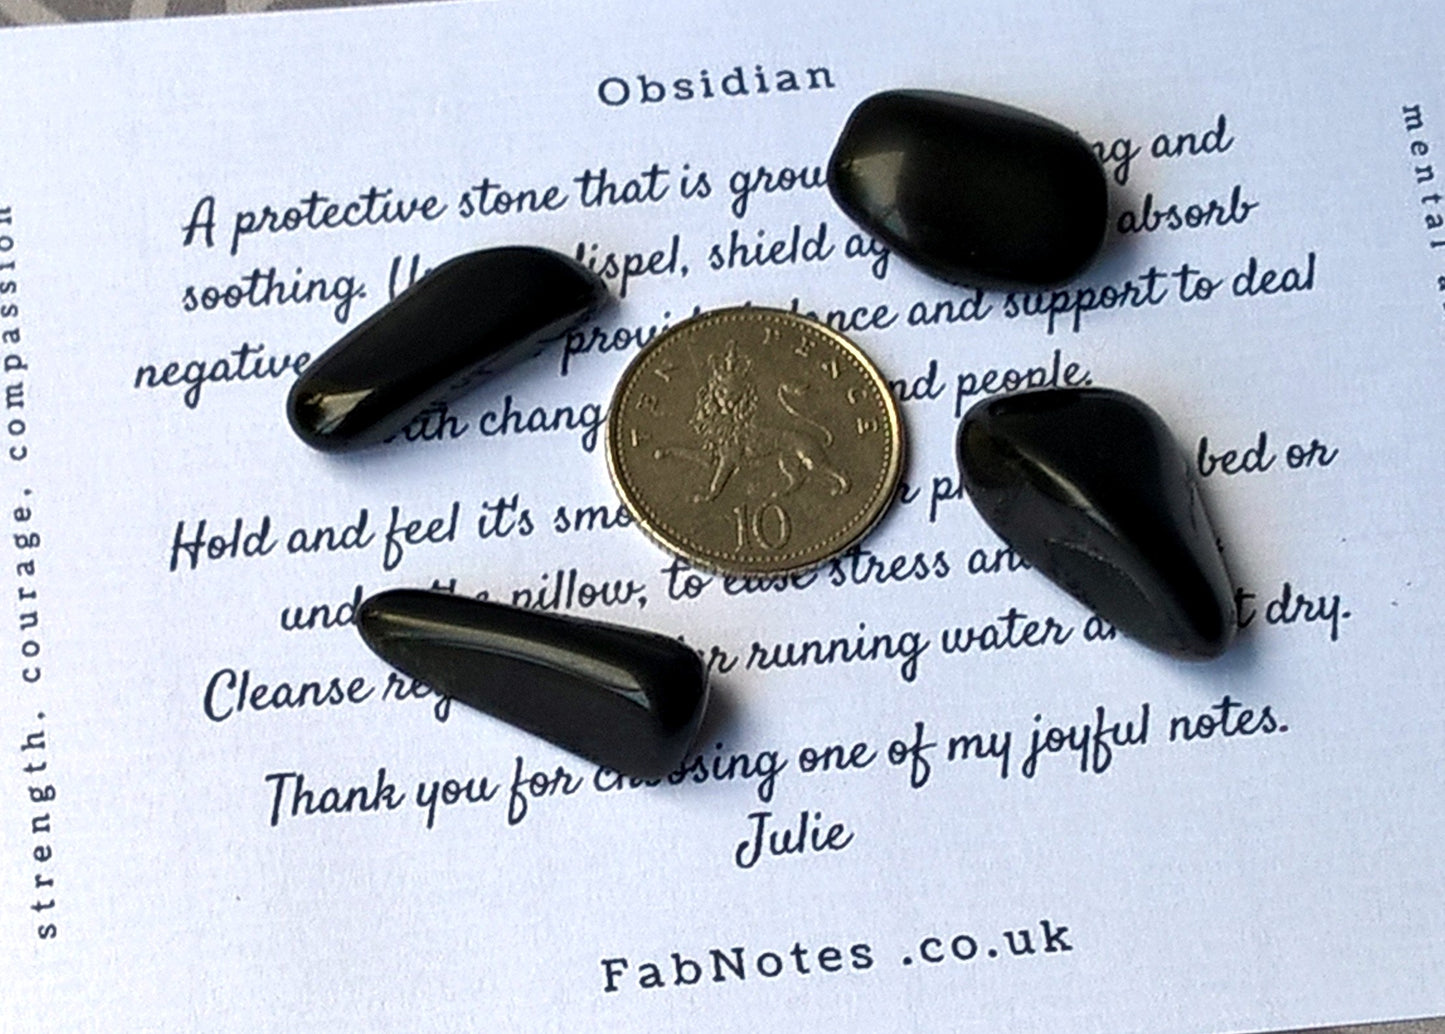 Black Obsidian Stone - protective talisman